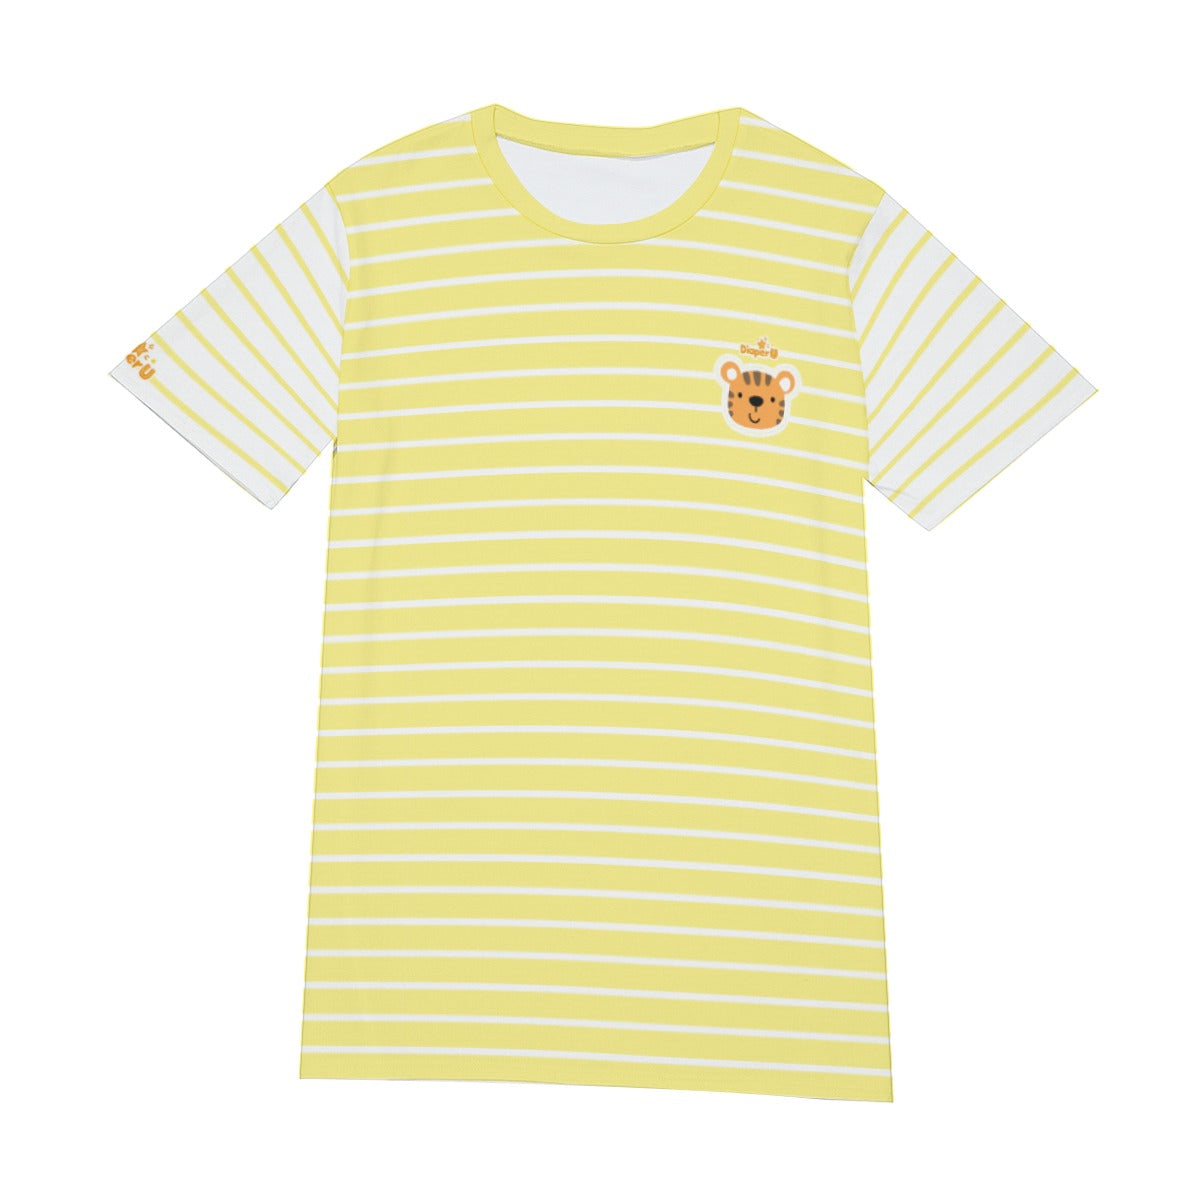 Adult Baby Play Shirt - Yellow Tiger